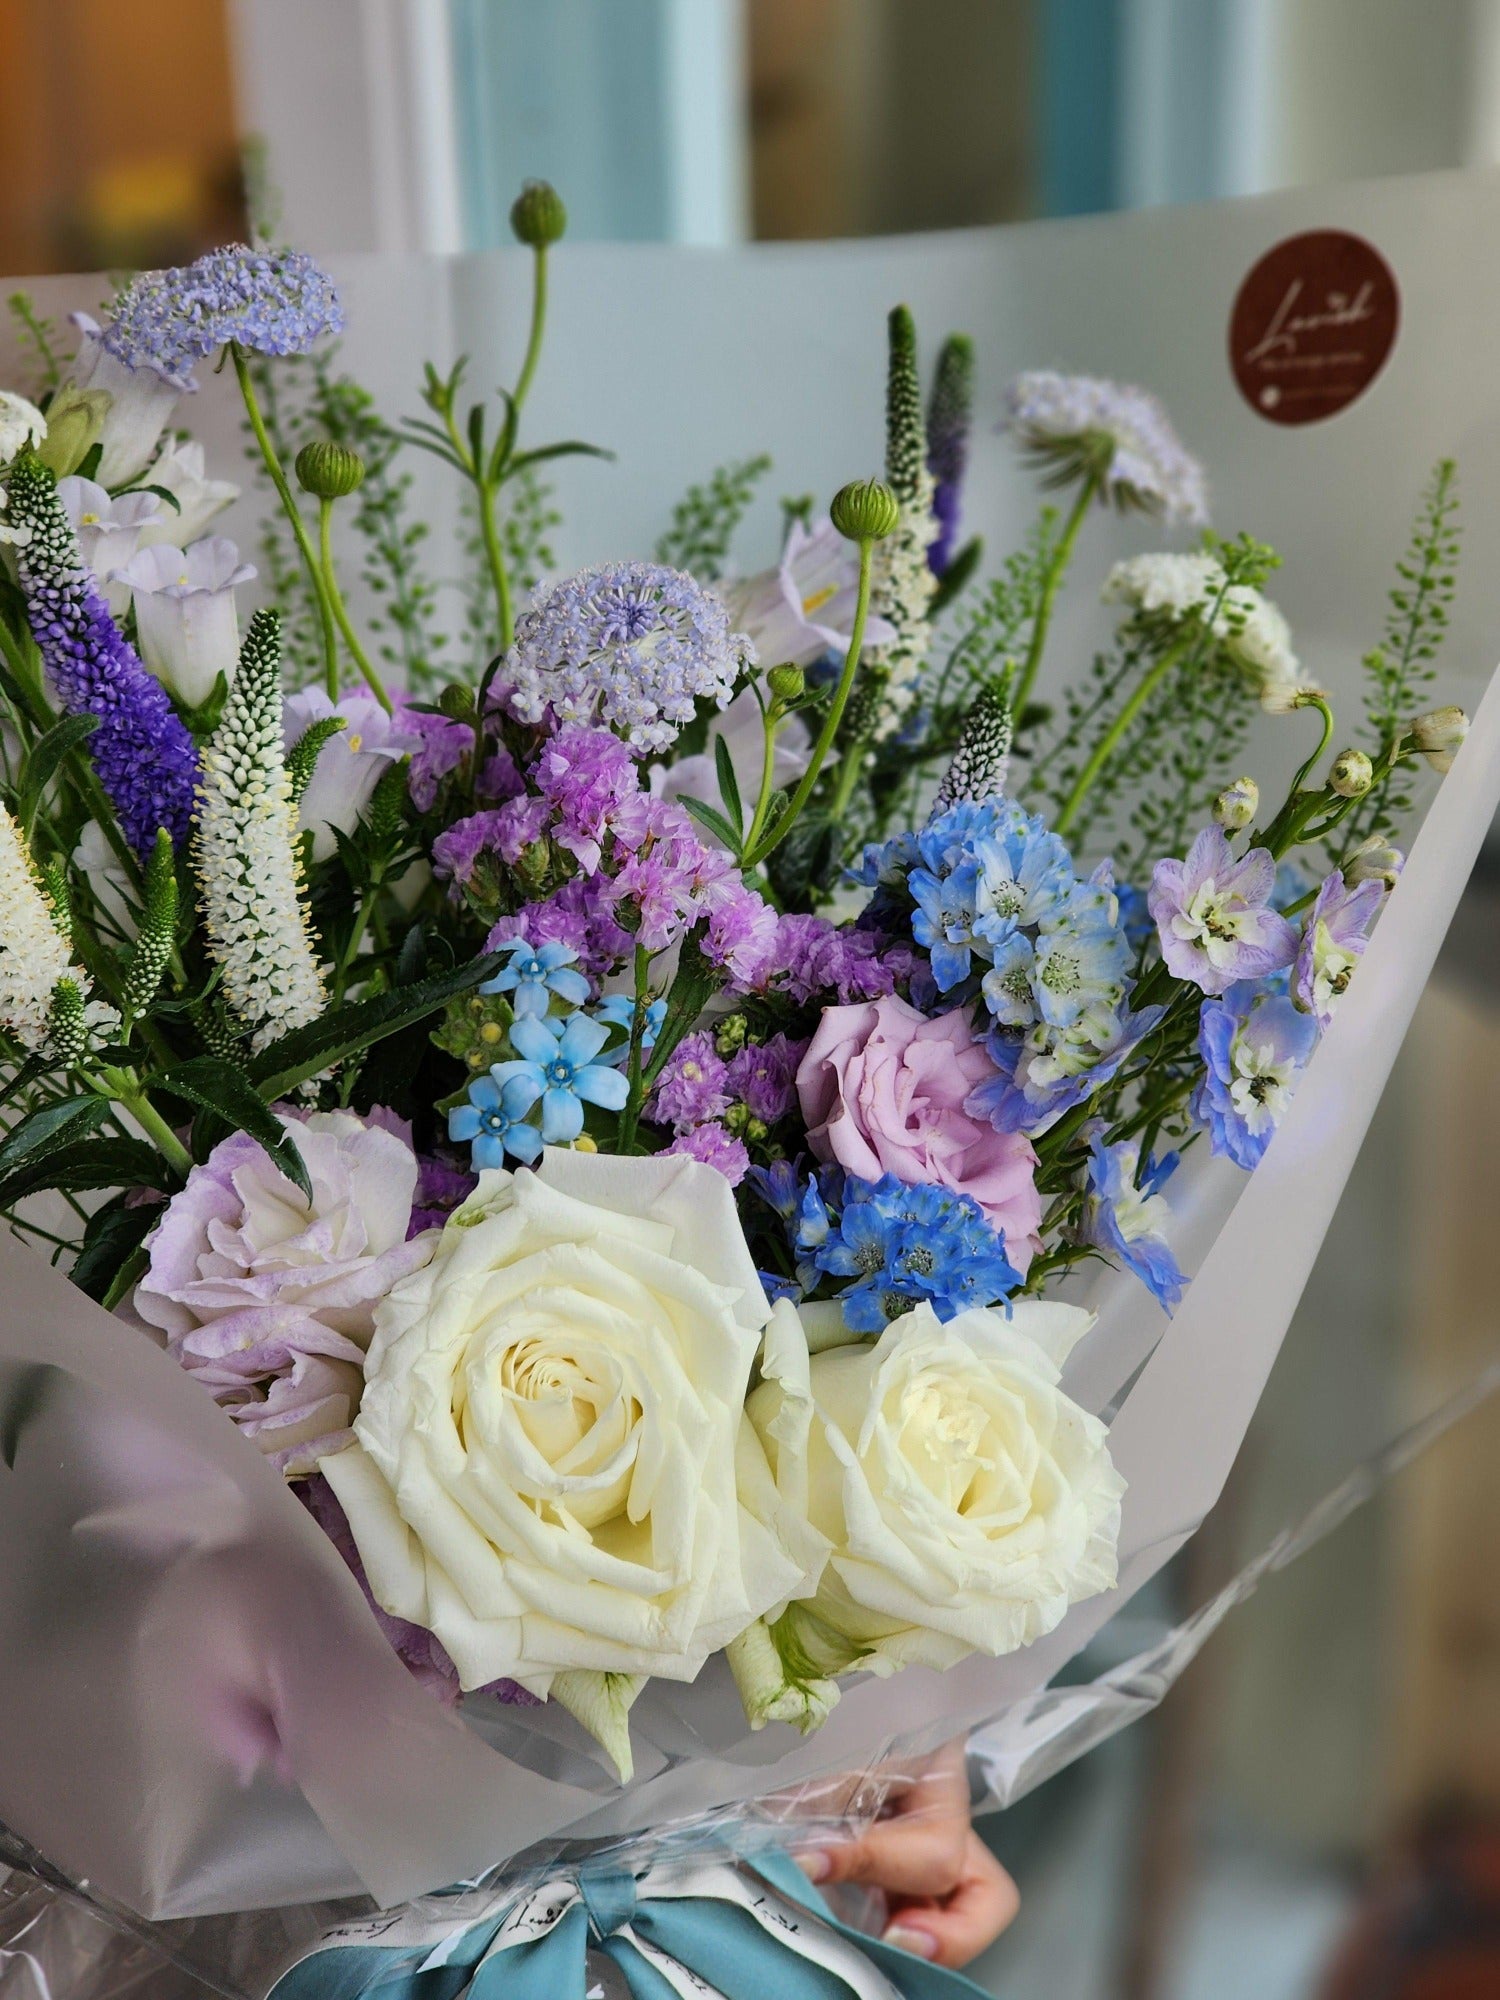 Soft white roses and stunning blue tweed bouque - Lavish Florist